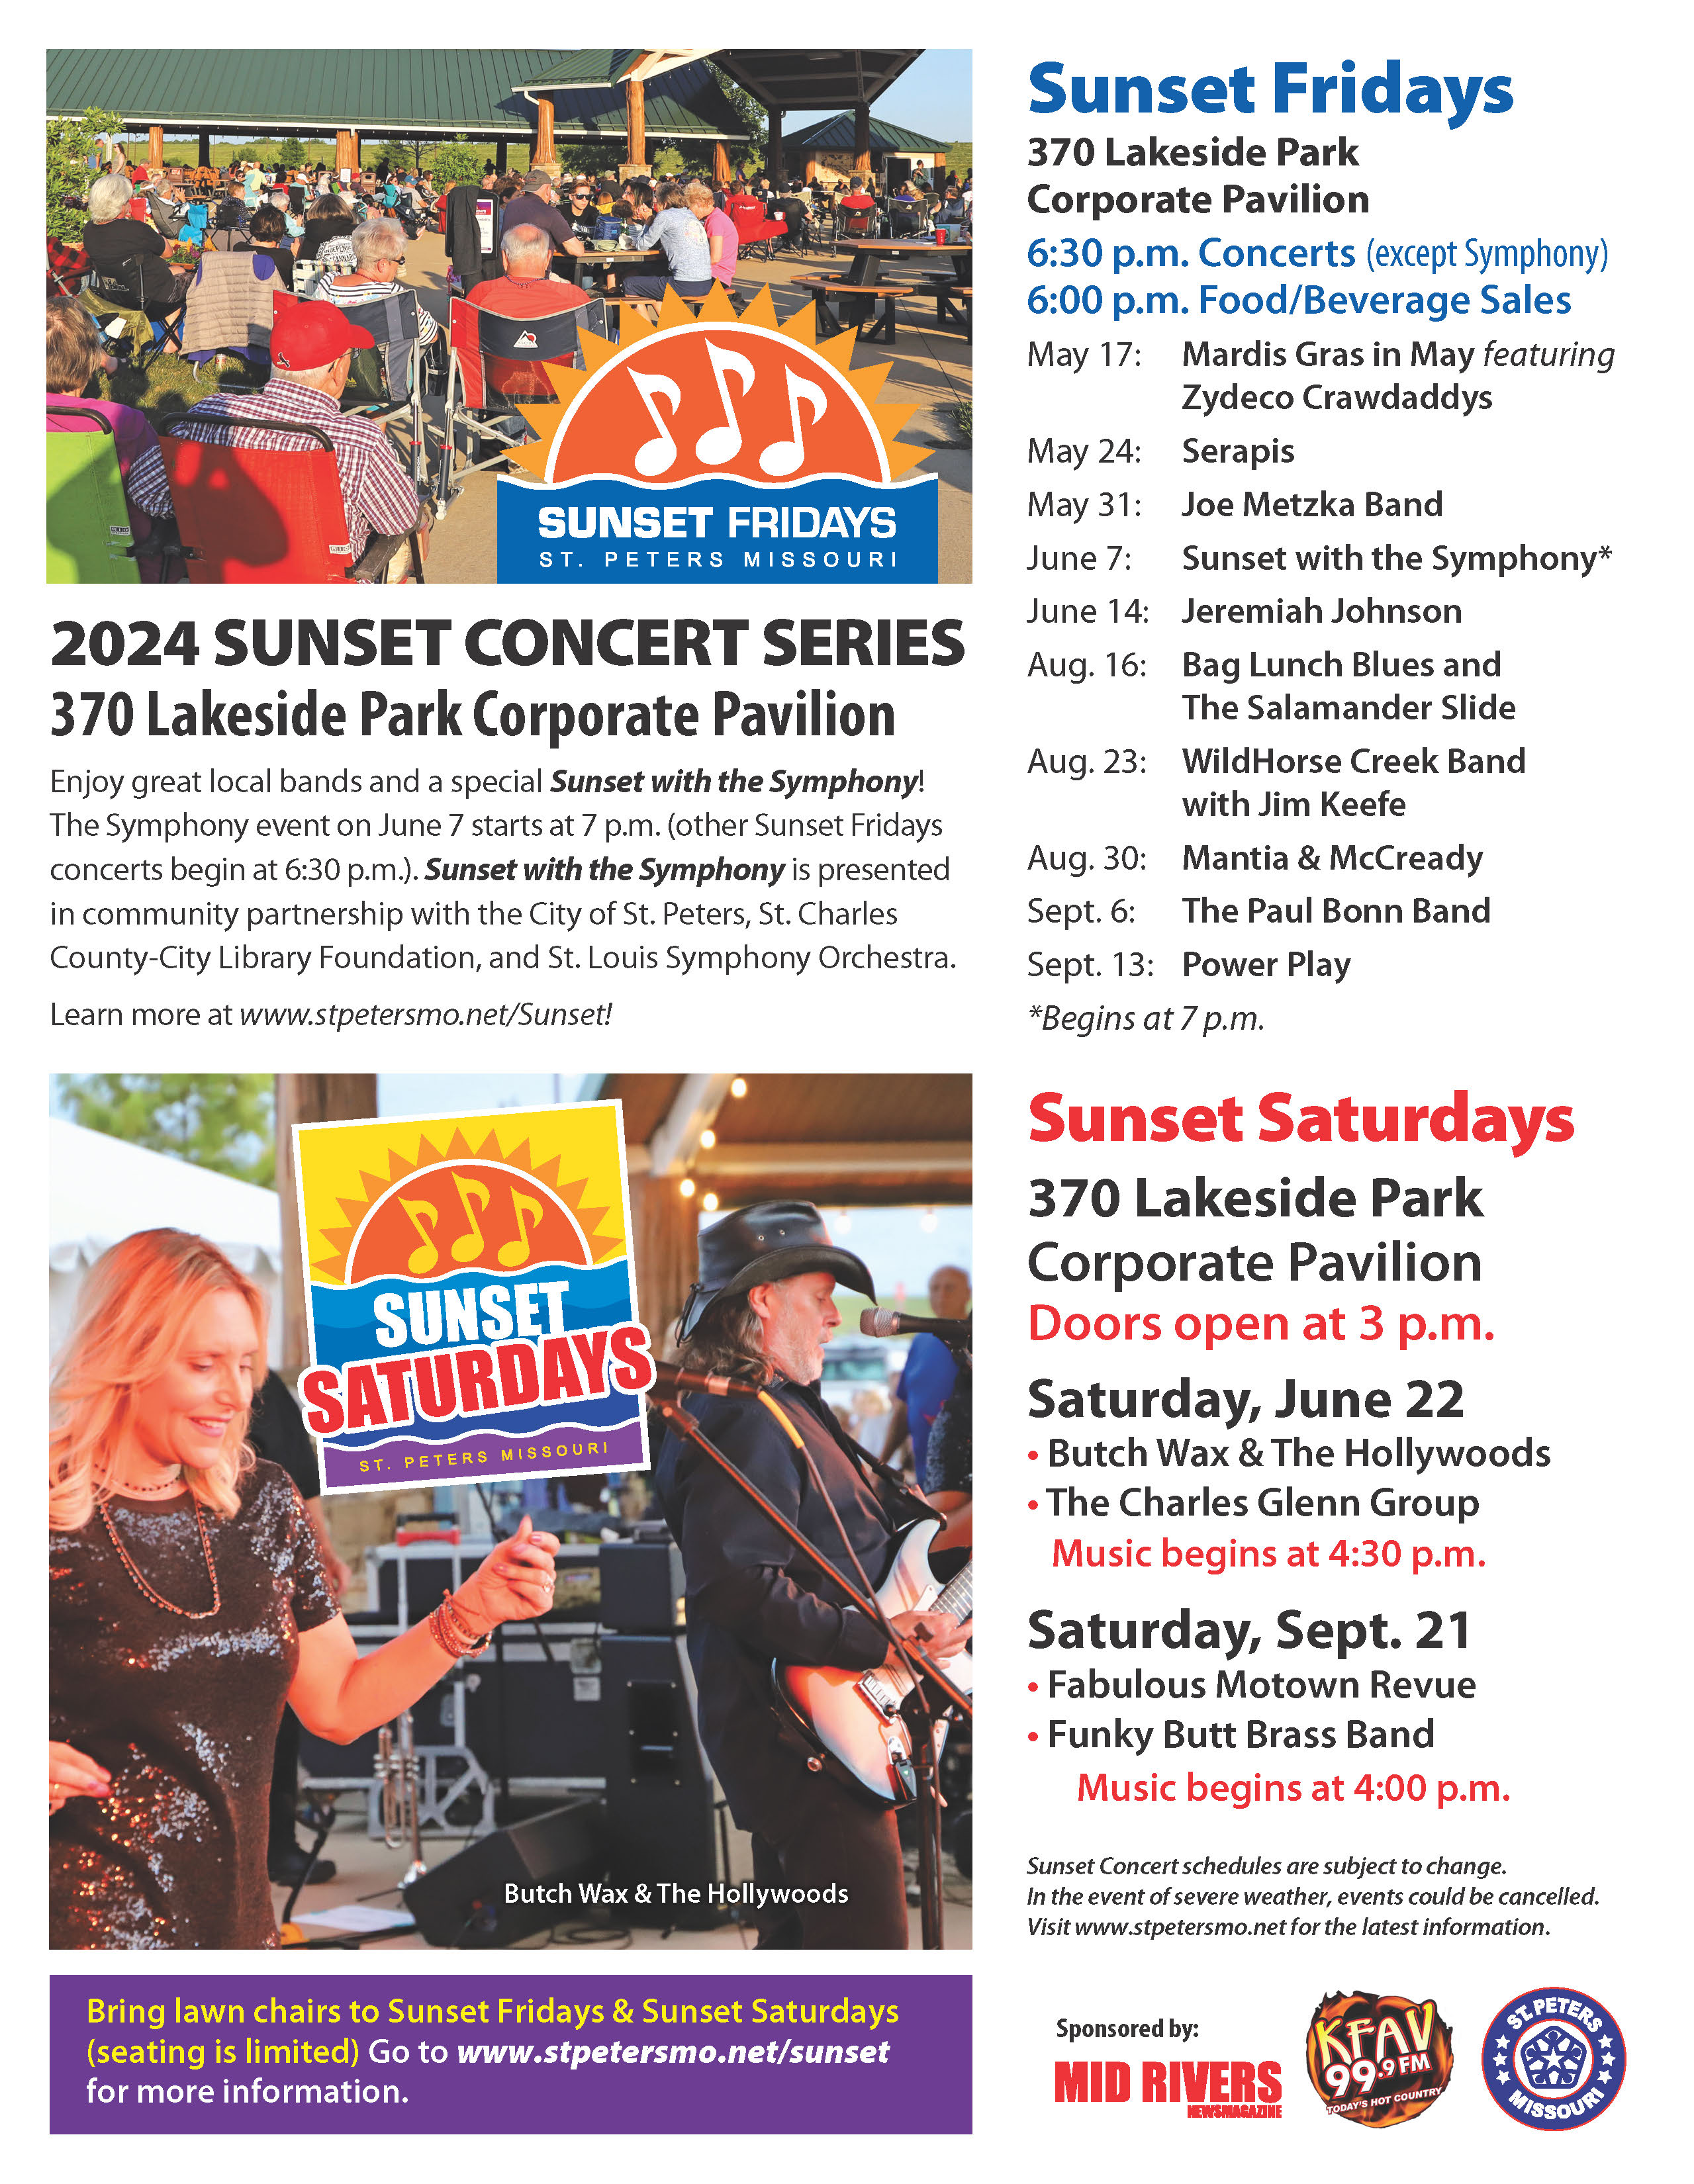 Sunset Fridays 2024 concert schedule 